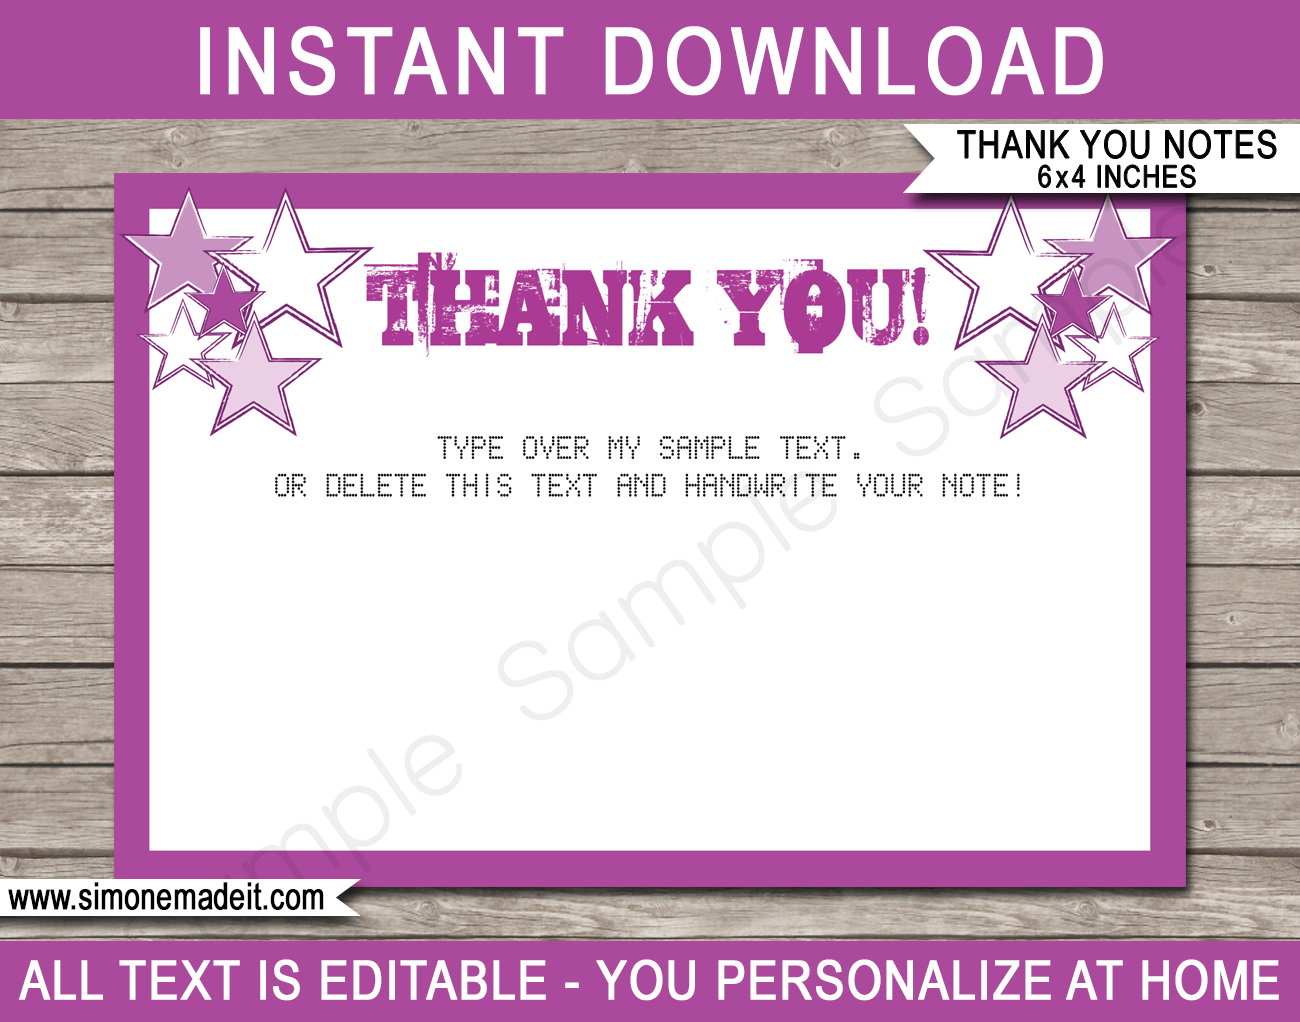 Printable Rock Star Birthday Party Thank You Cards Template - Favor Tags - Karaoke theme - Editable Text - Instant Download via simonemadeit.com